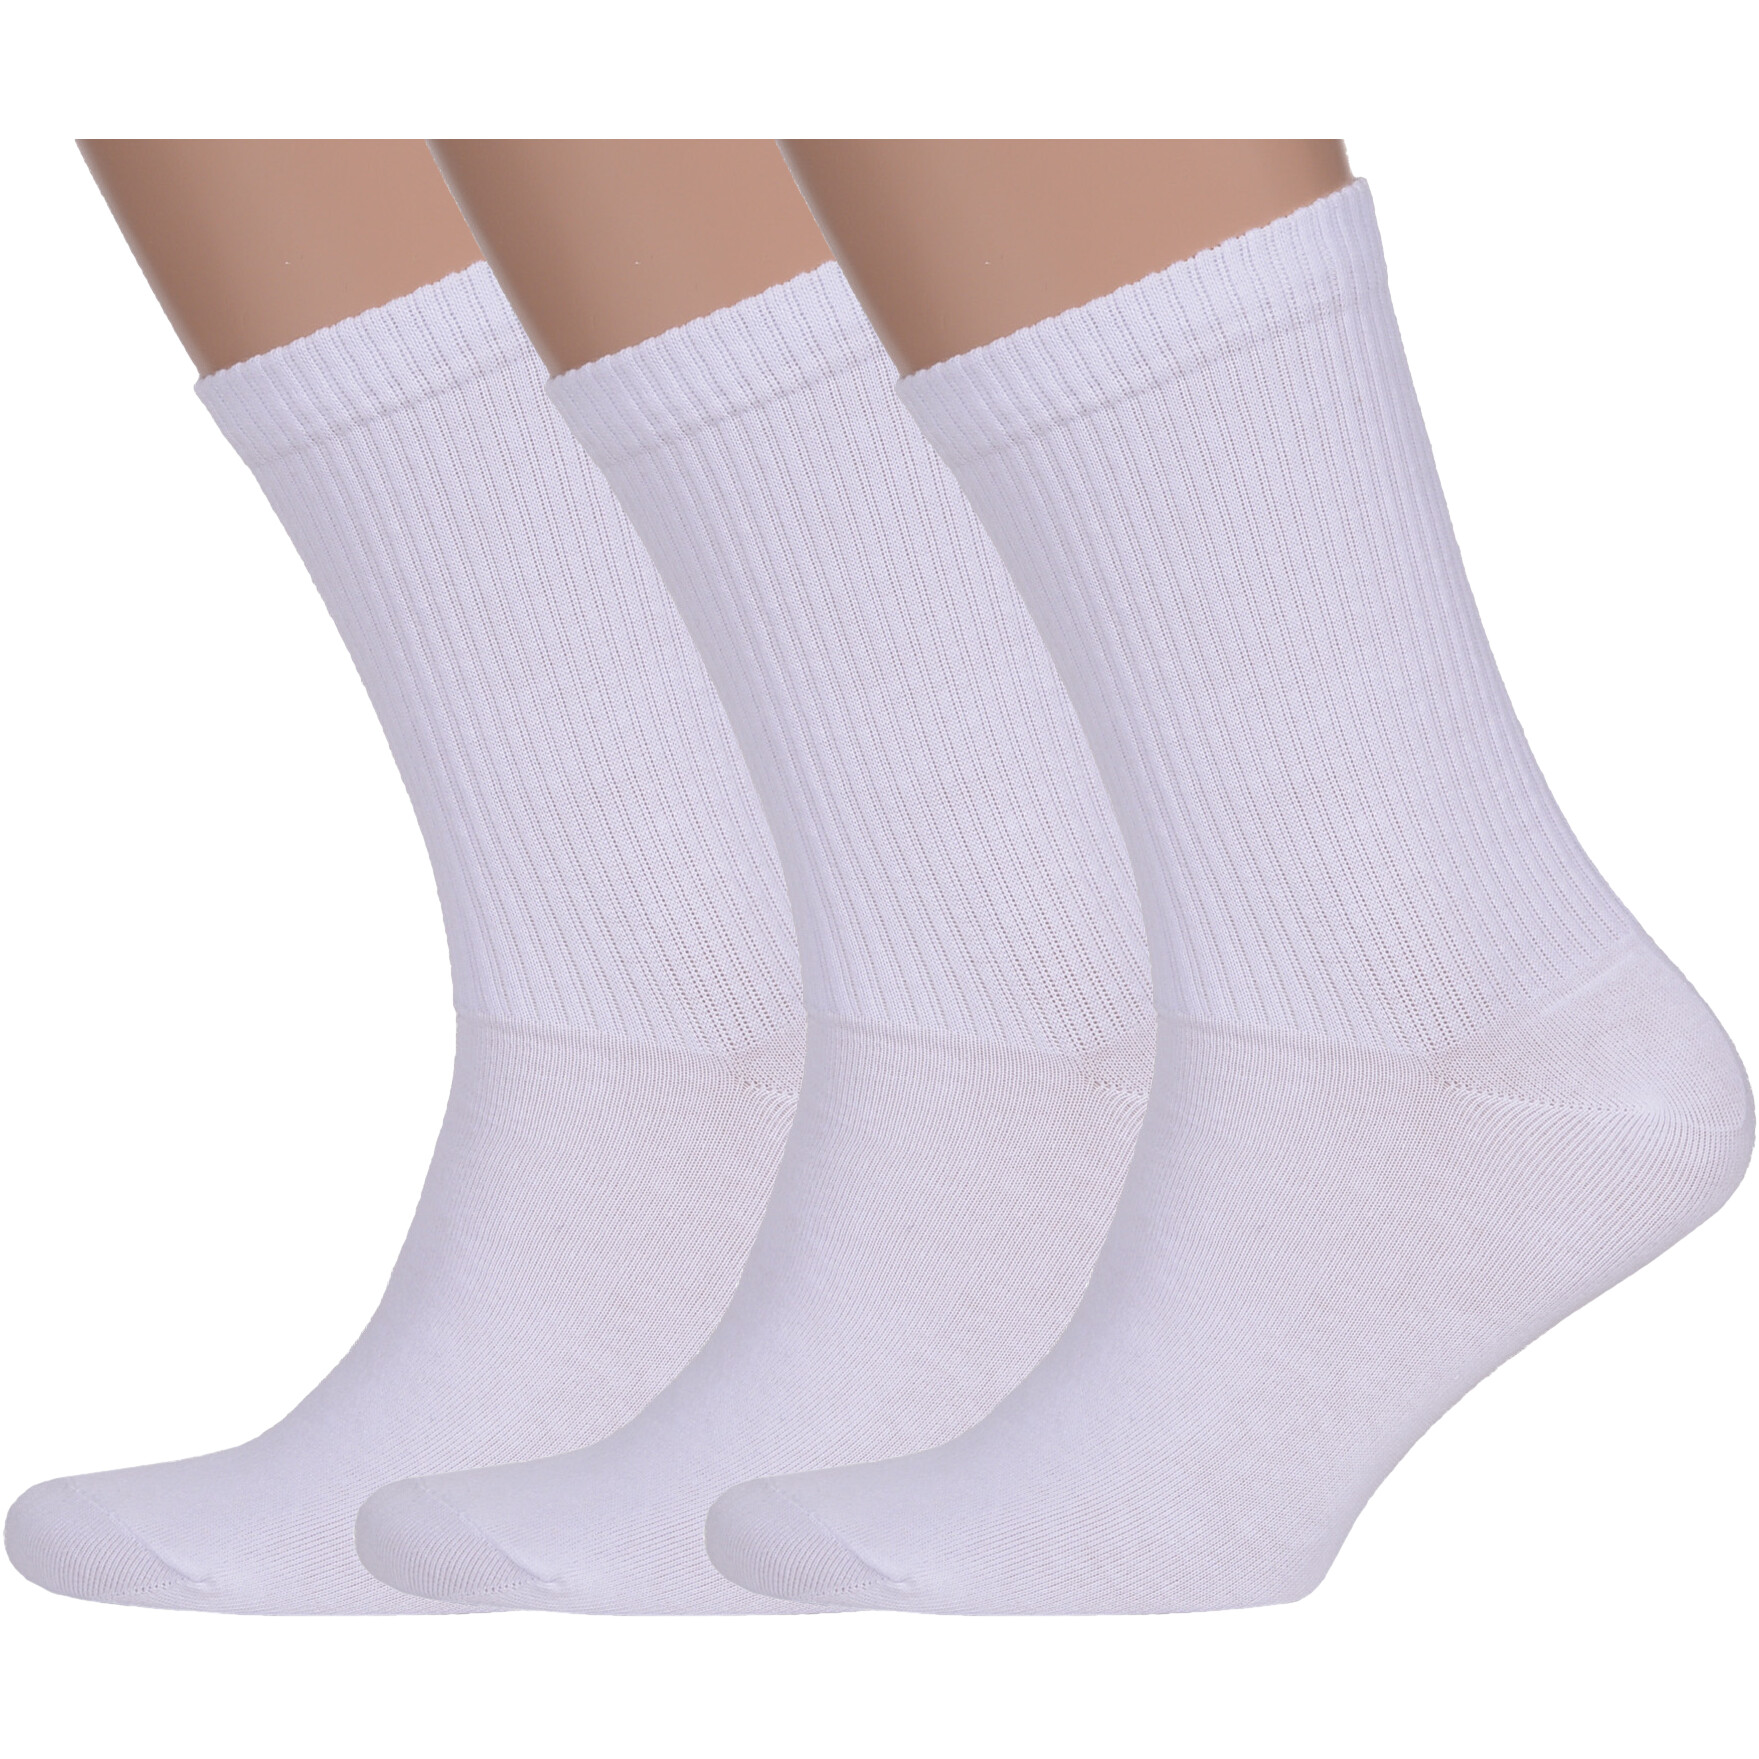 Комплект носков мужских VIRTUOSO 3-nm-50 белых 25 3 пары